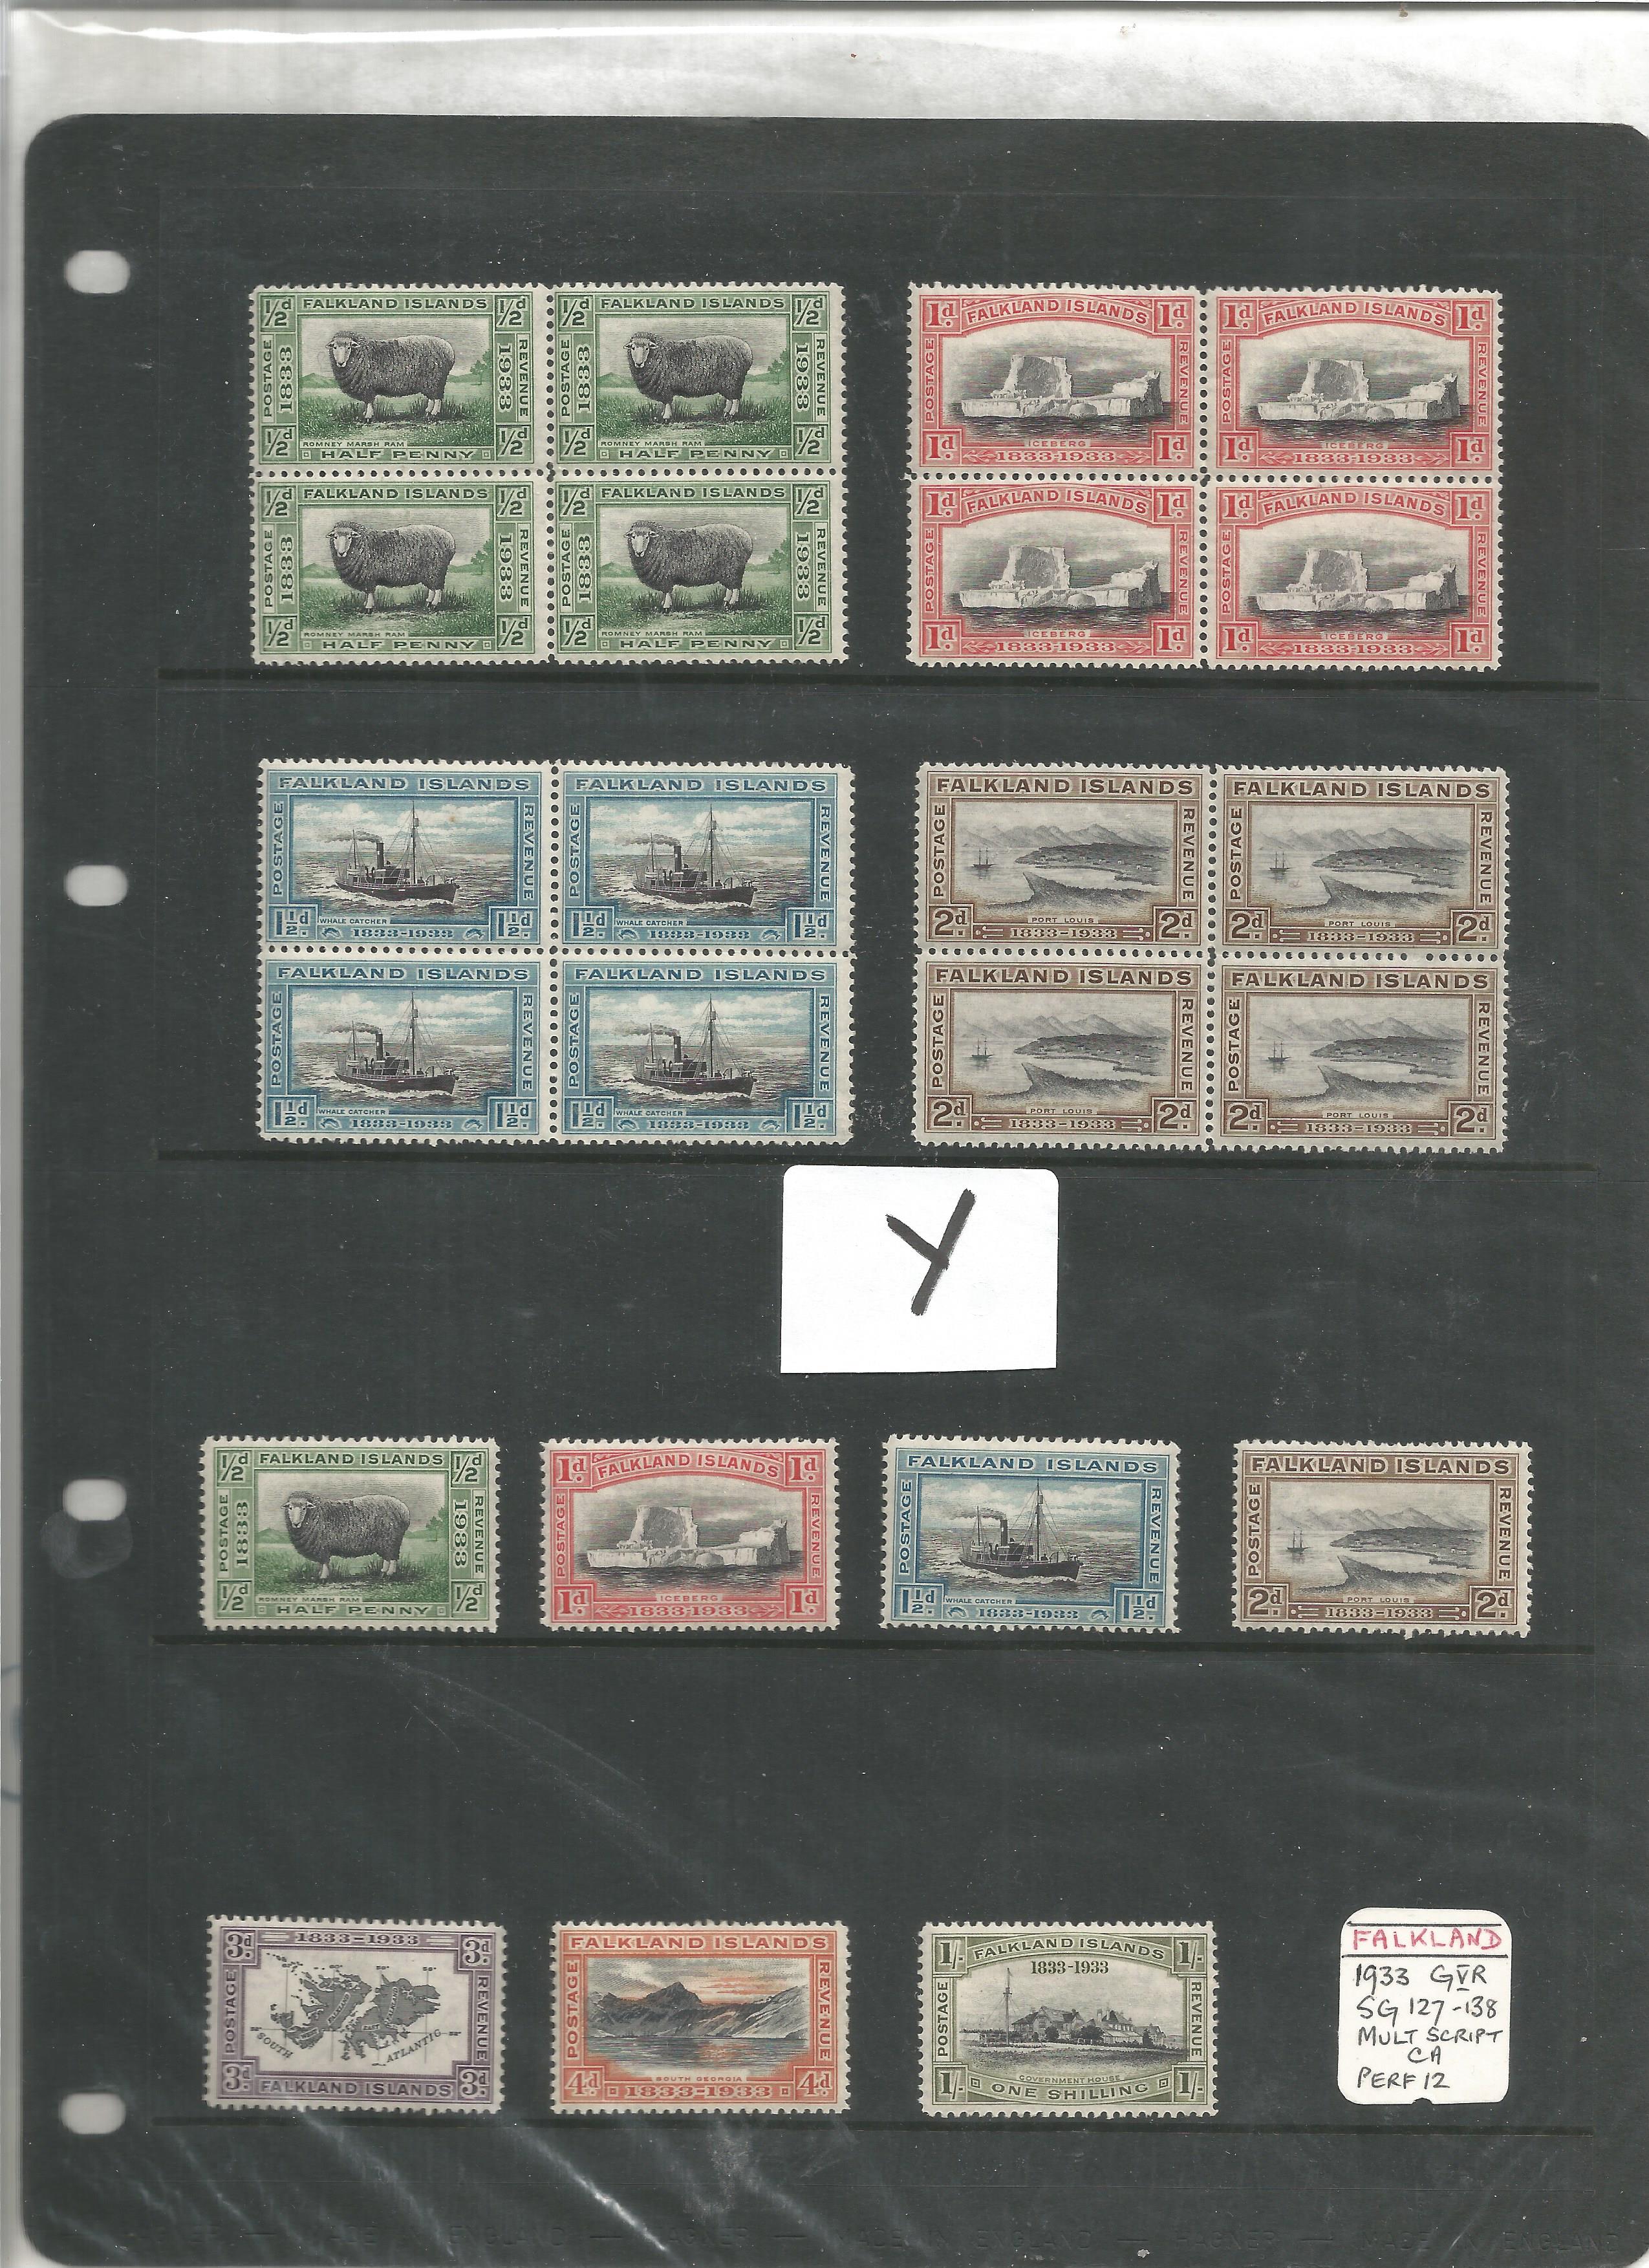 Falkland Islands mint stamp collection. 28 stamps. Incudes part set SG127, 138 1935 GV, 1935 GV